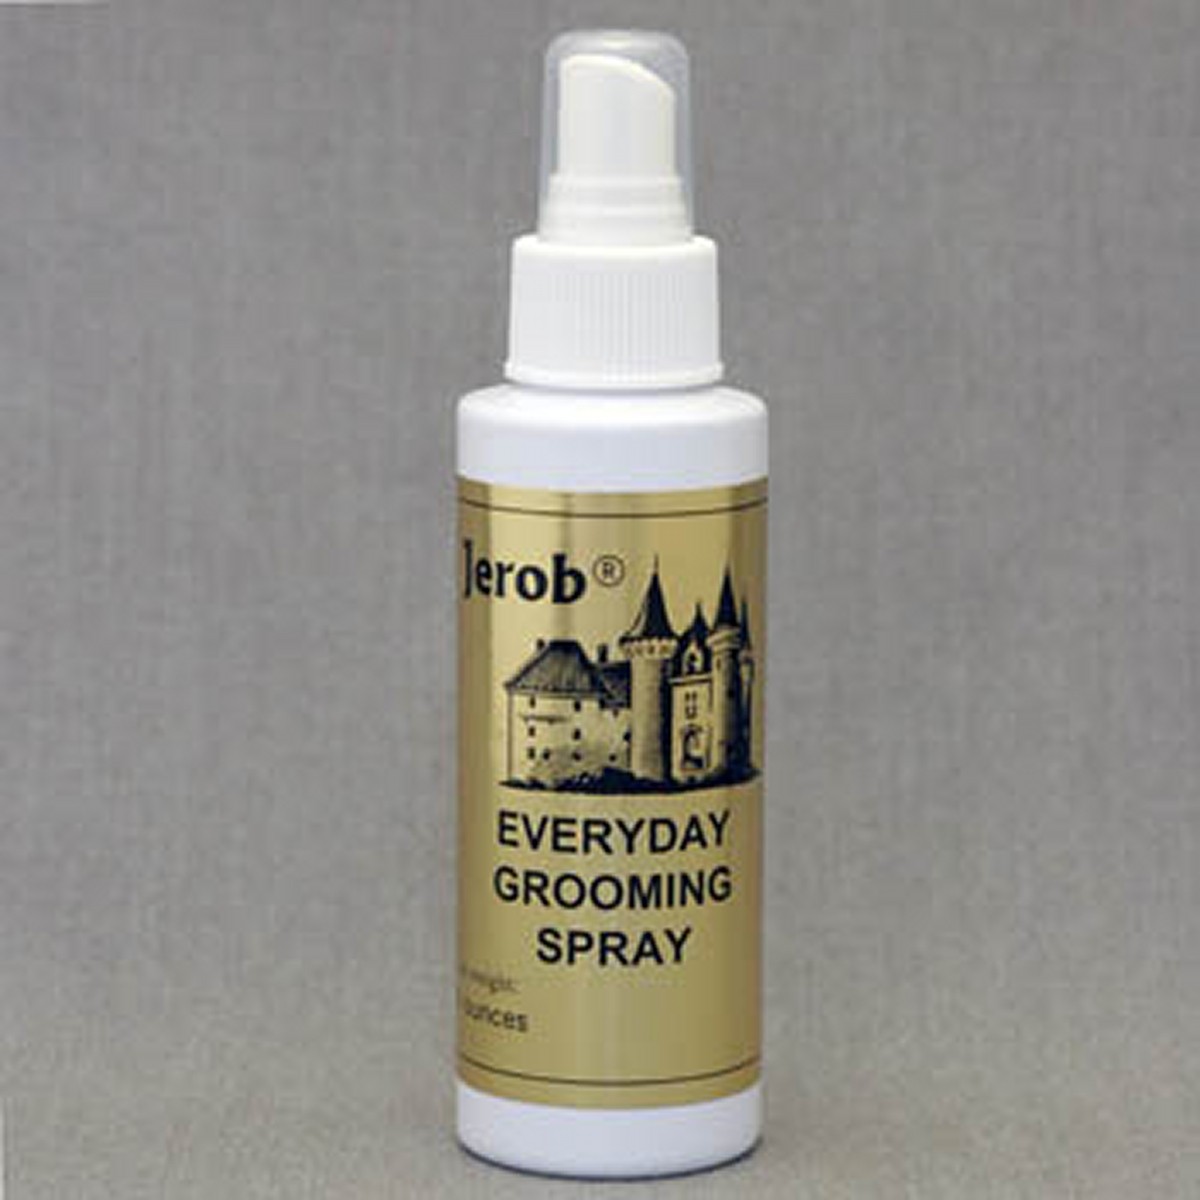 Jerob Spray Everyday Grooming